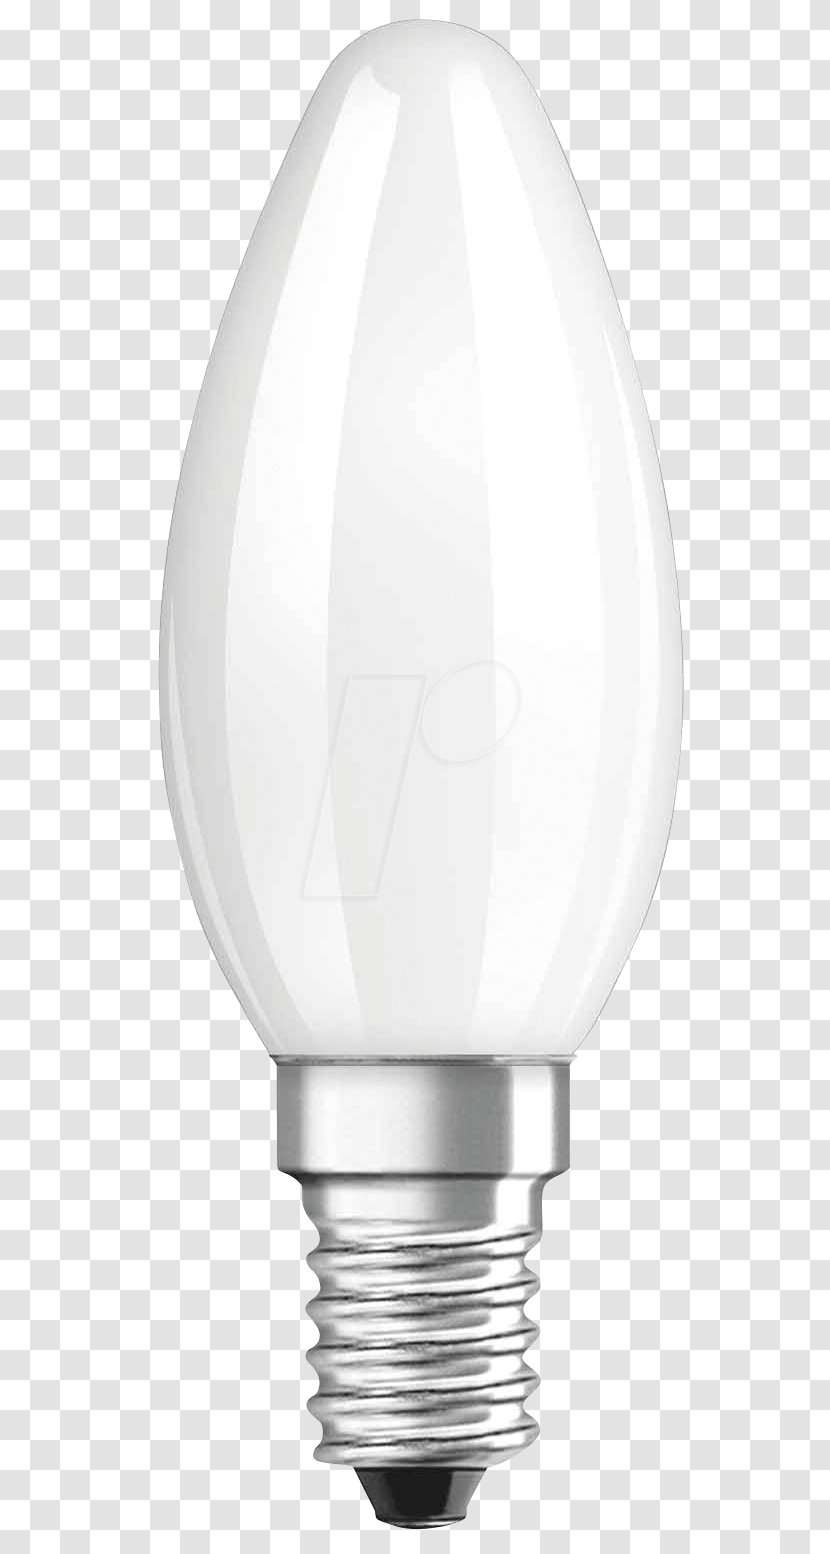 Edison Screw LED Lamp Light-emitting Diode Filament - Incandescent Light Bulb Transparent PNG